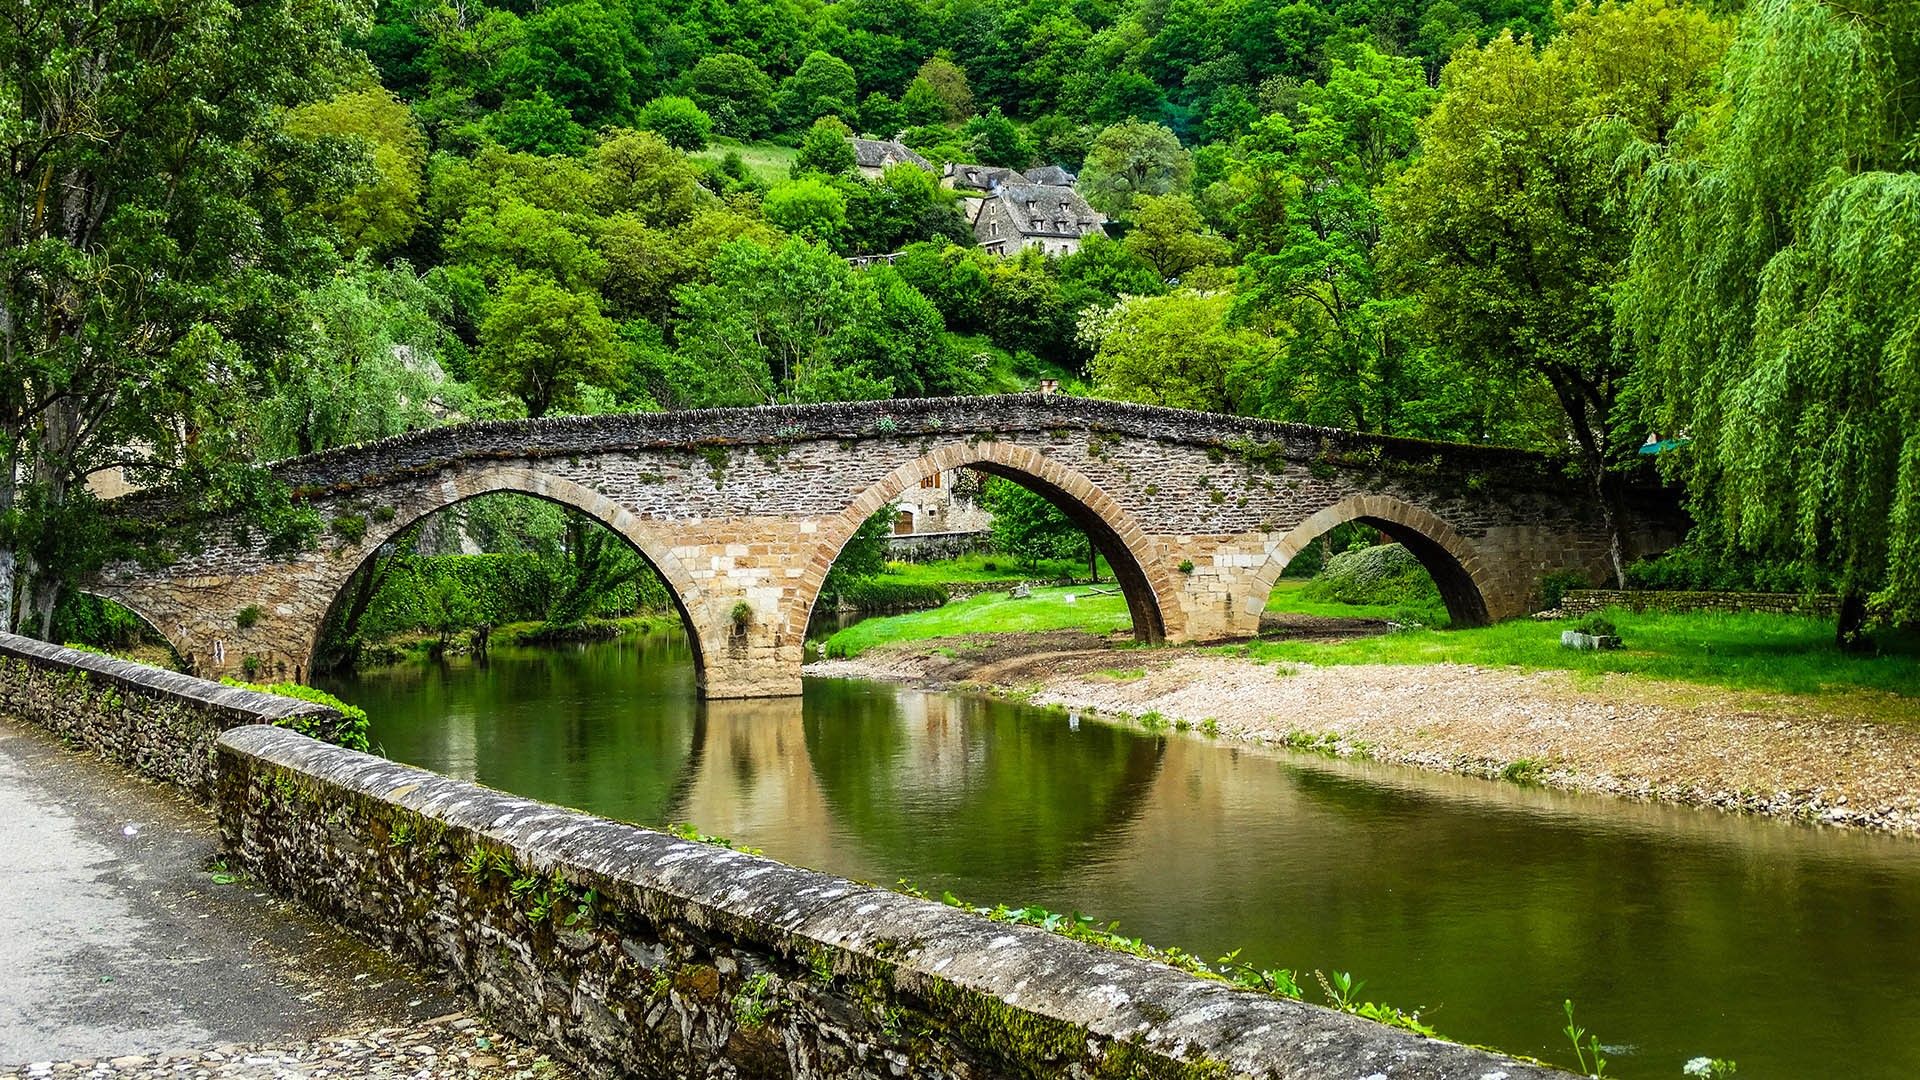 Belcastel medieval stone bridge across Aveyron river with forest, Aveyron, France. Windows 10 Spotlight Image